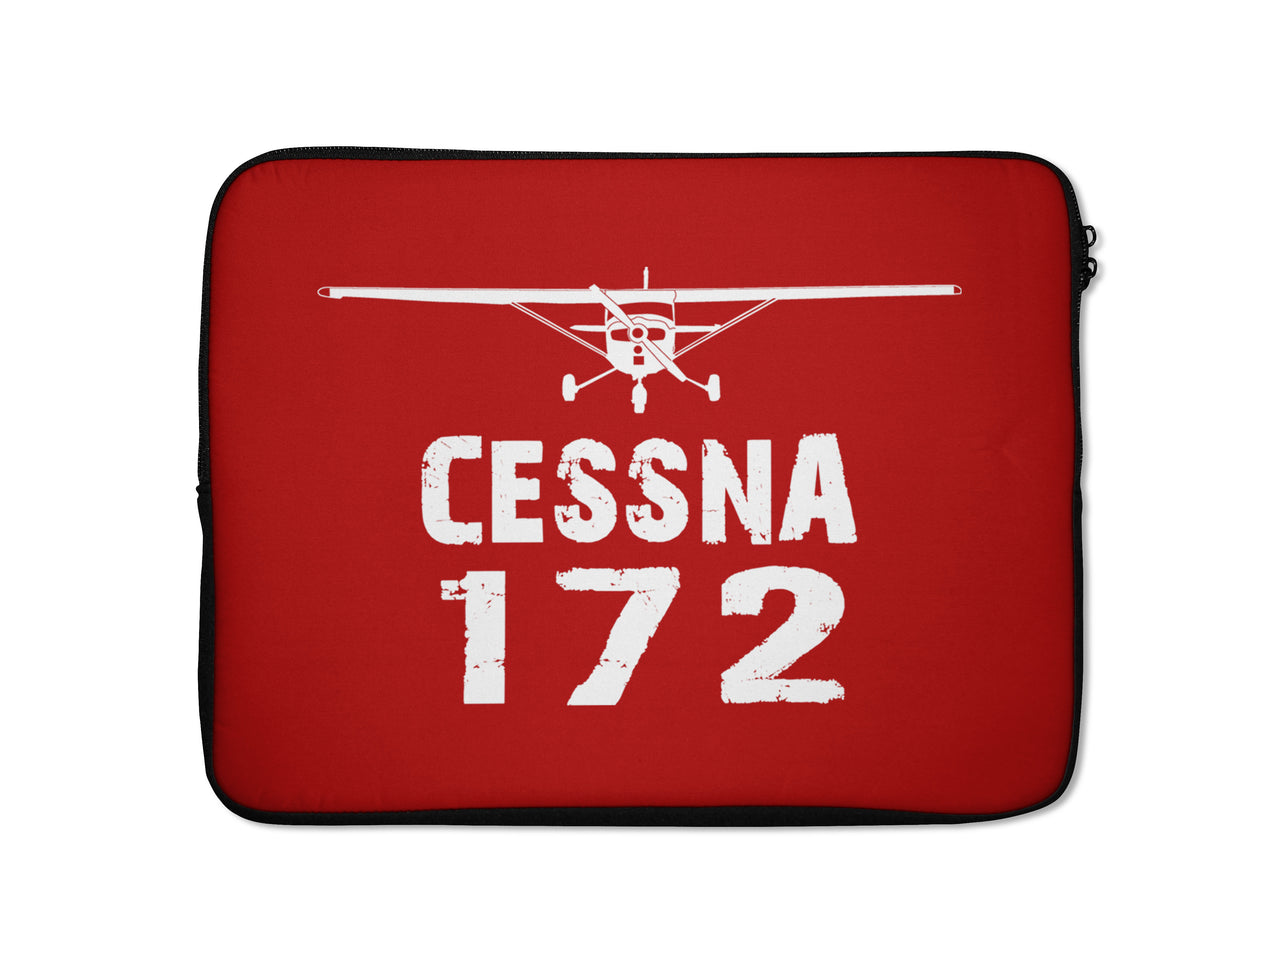 Cessna 172 & Plane Designed Laptop & Tablet Cases